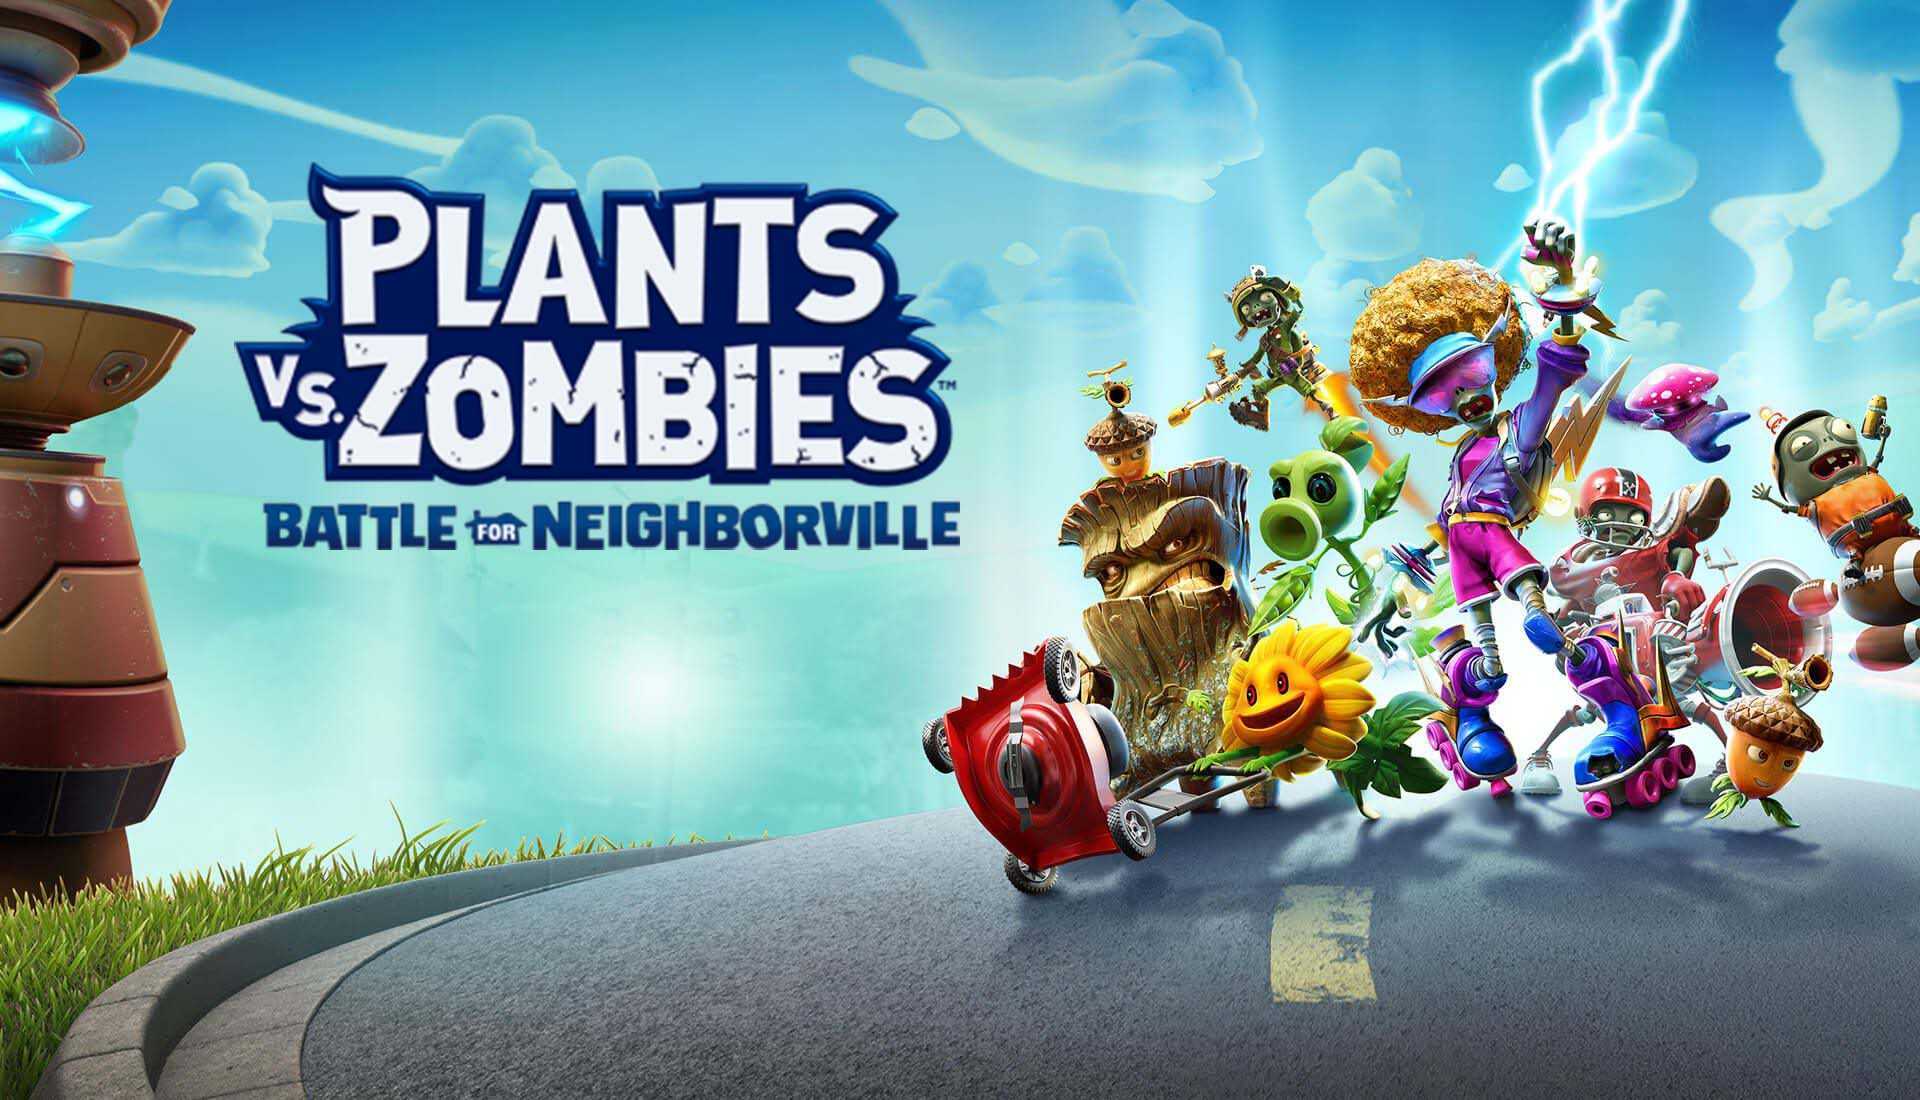 Игра битве зомби против растений. Plants vs. Zombies: Battle for Neighborville. Растения против зомби Battle for Neighborville. ПВЗ битва за нейборвиль. PVZ битва за нейборвиль.